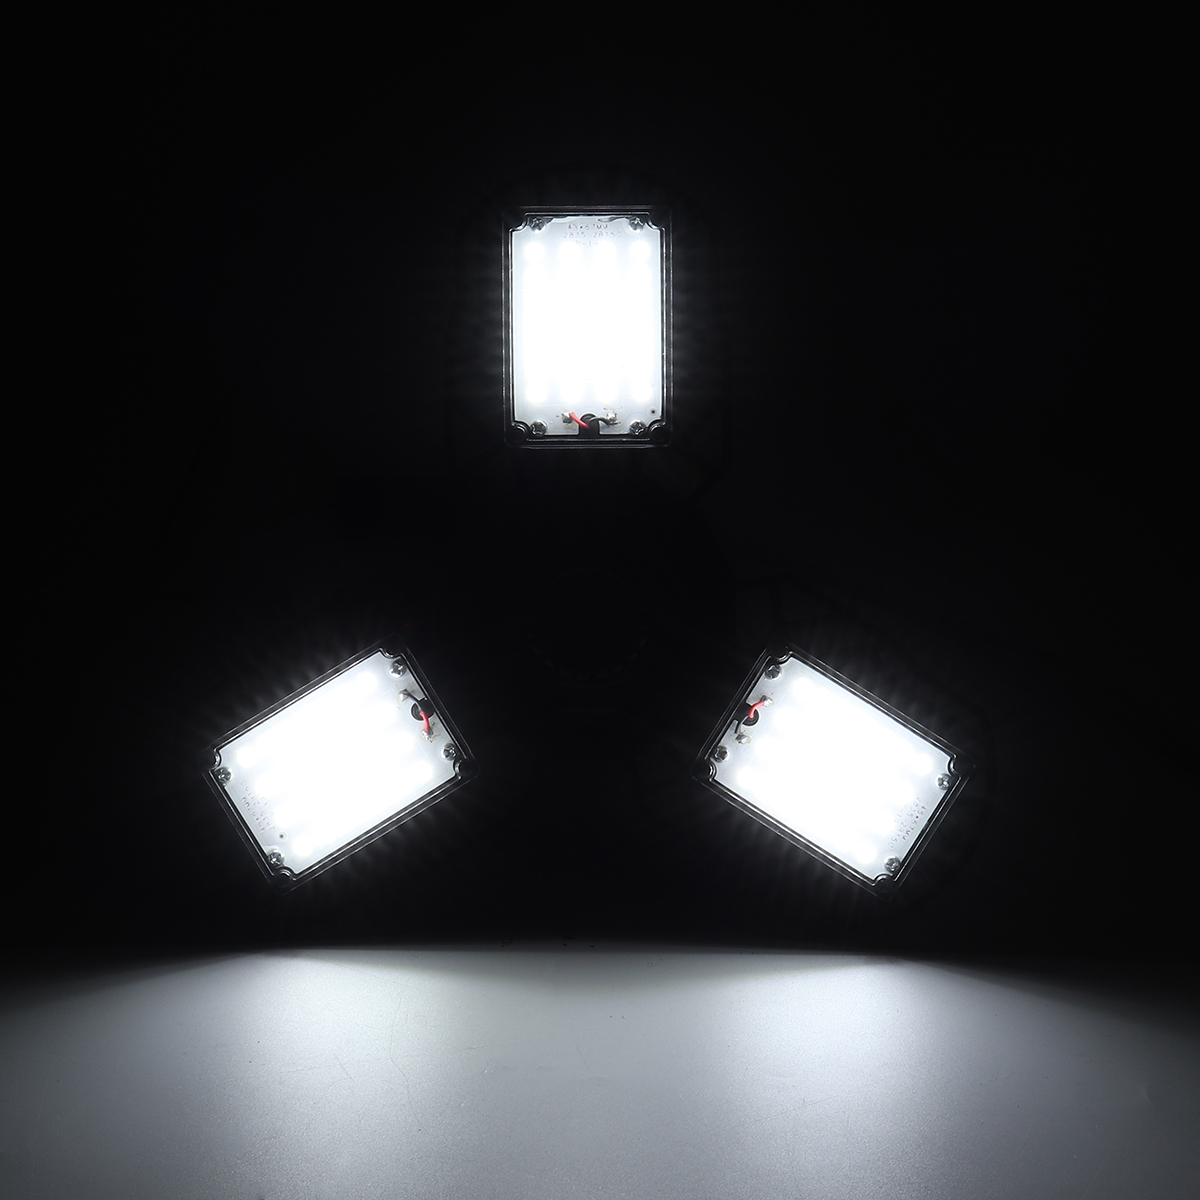 80W-LED-Garage-Lamp-Three-Leaves-E27-Light-Bulb-Deformable-Shop-Work-Lighting-Home-Ceiling-Fixtures-1691074-9